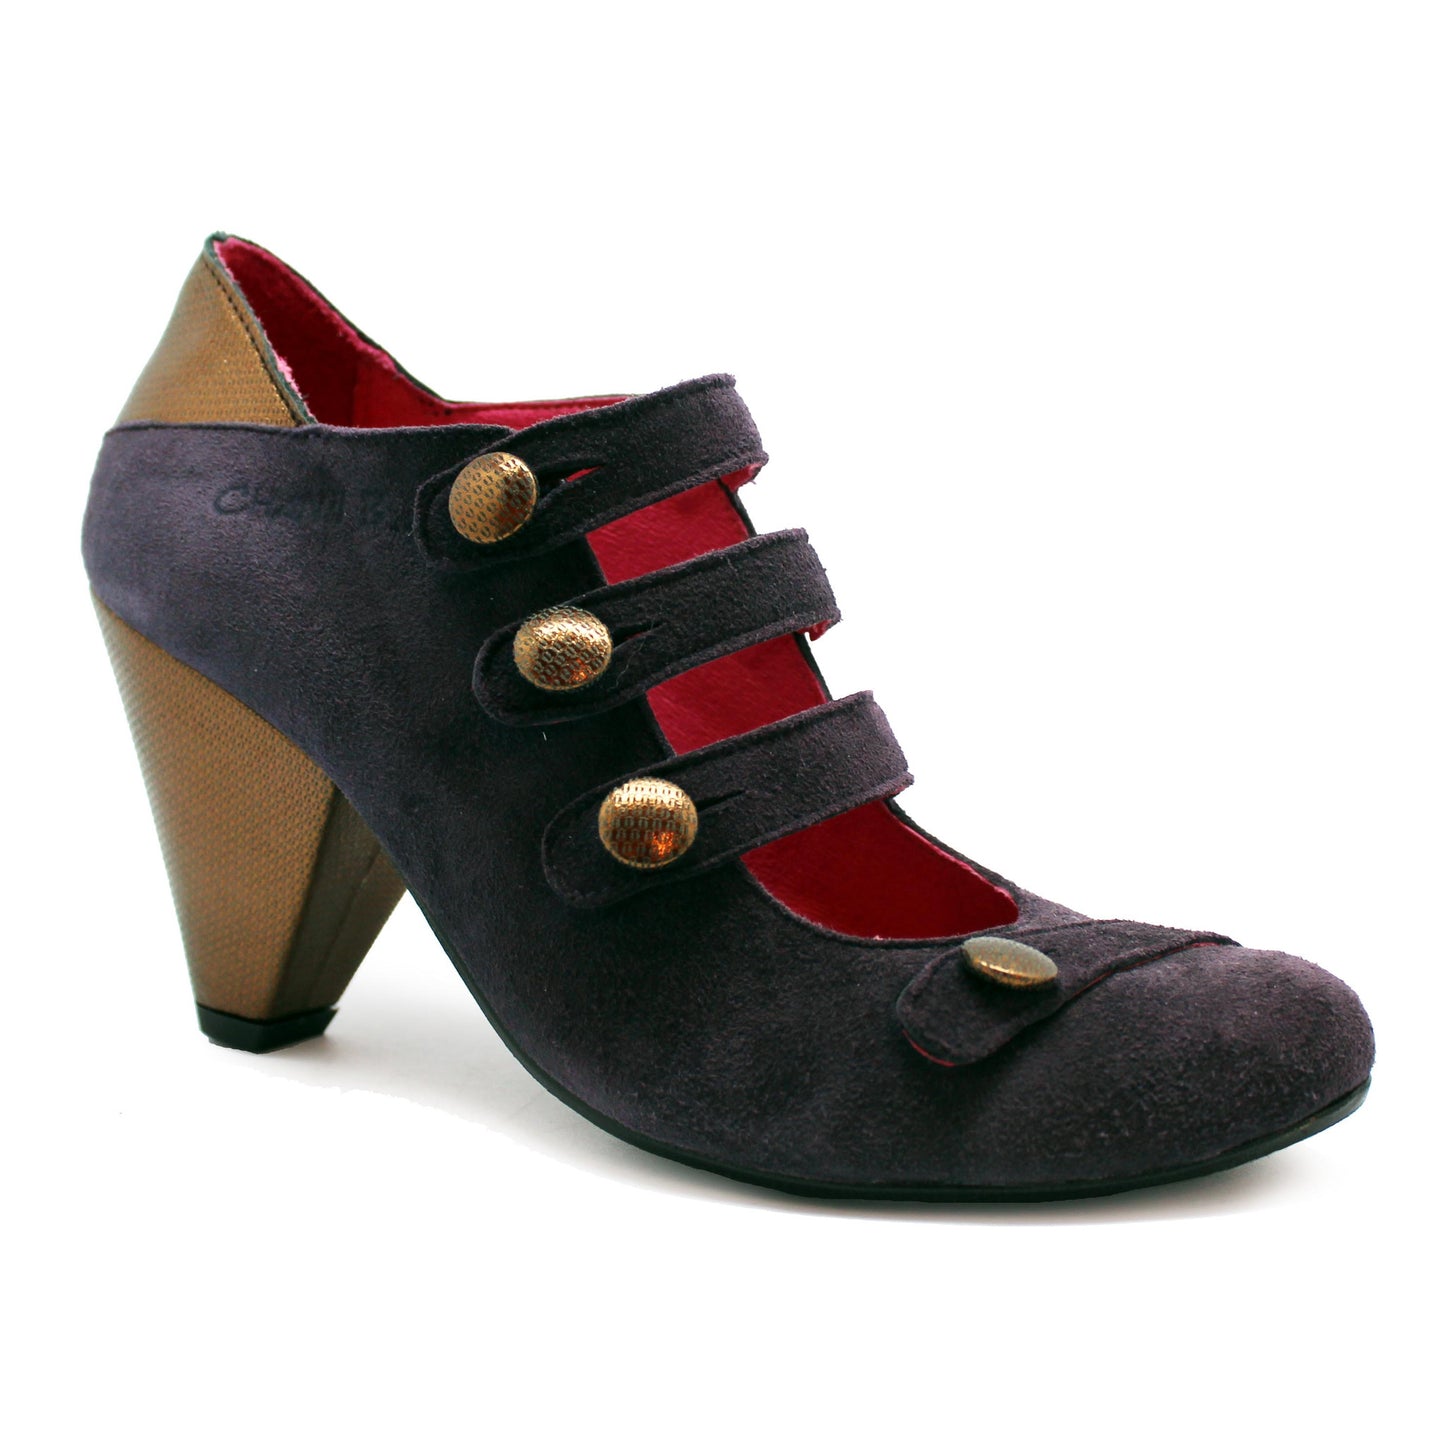 Voila - Purple/Bronze shoe wit buttons last pairs 35 and 40!